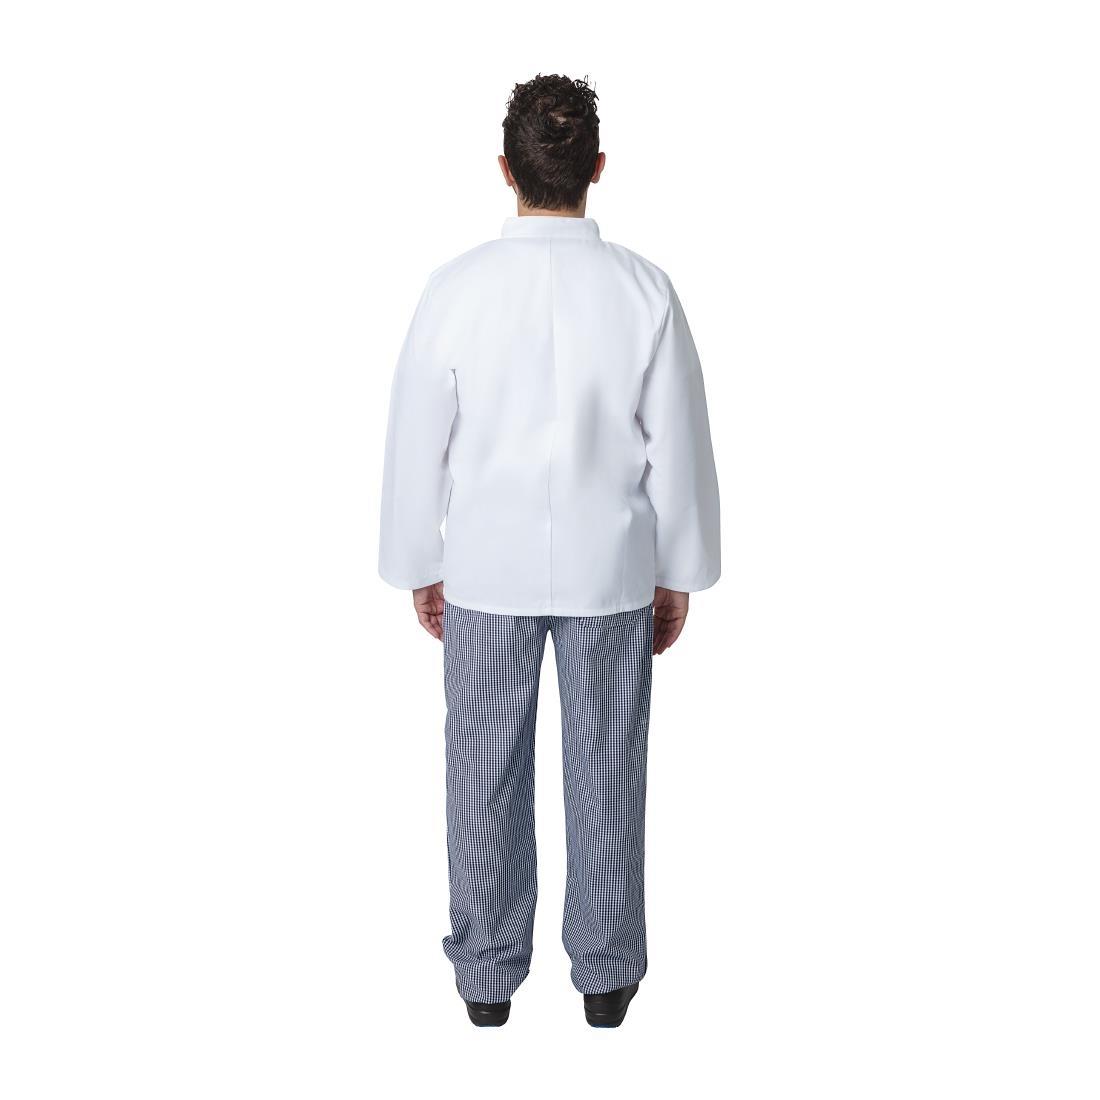 Whites Vegas Unisex Chefs Jacket Long Sleeve White 4XL - A134-4XL  - 4